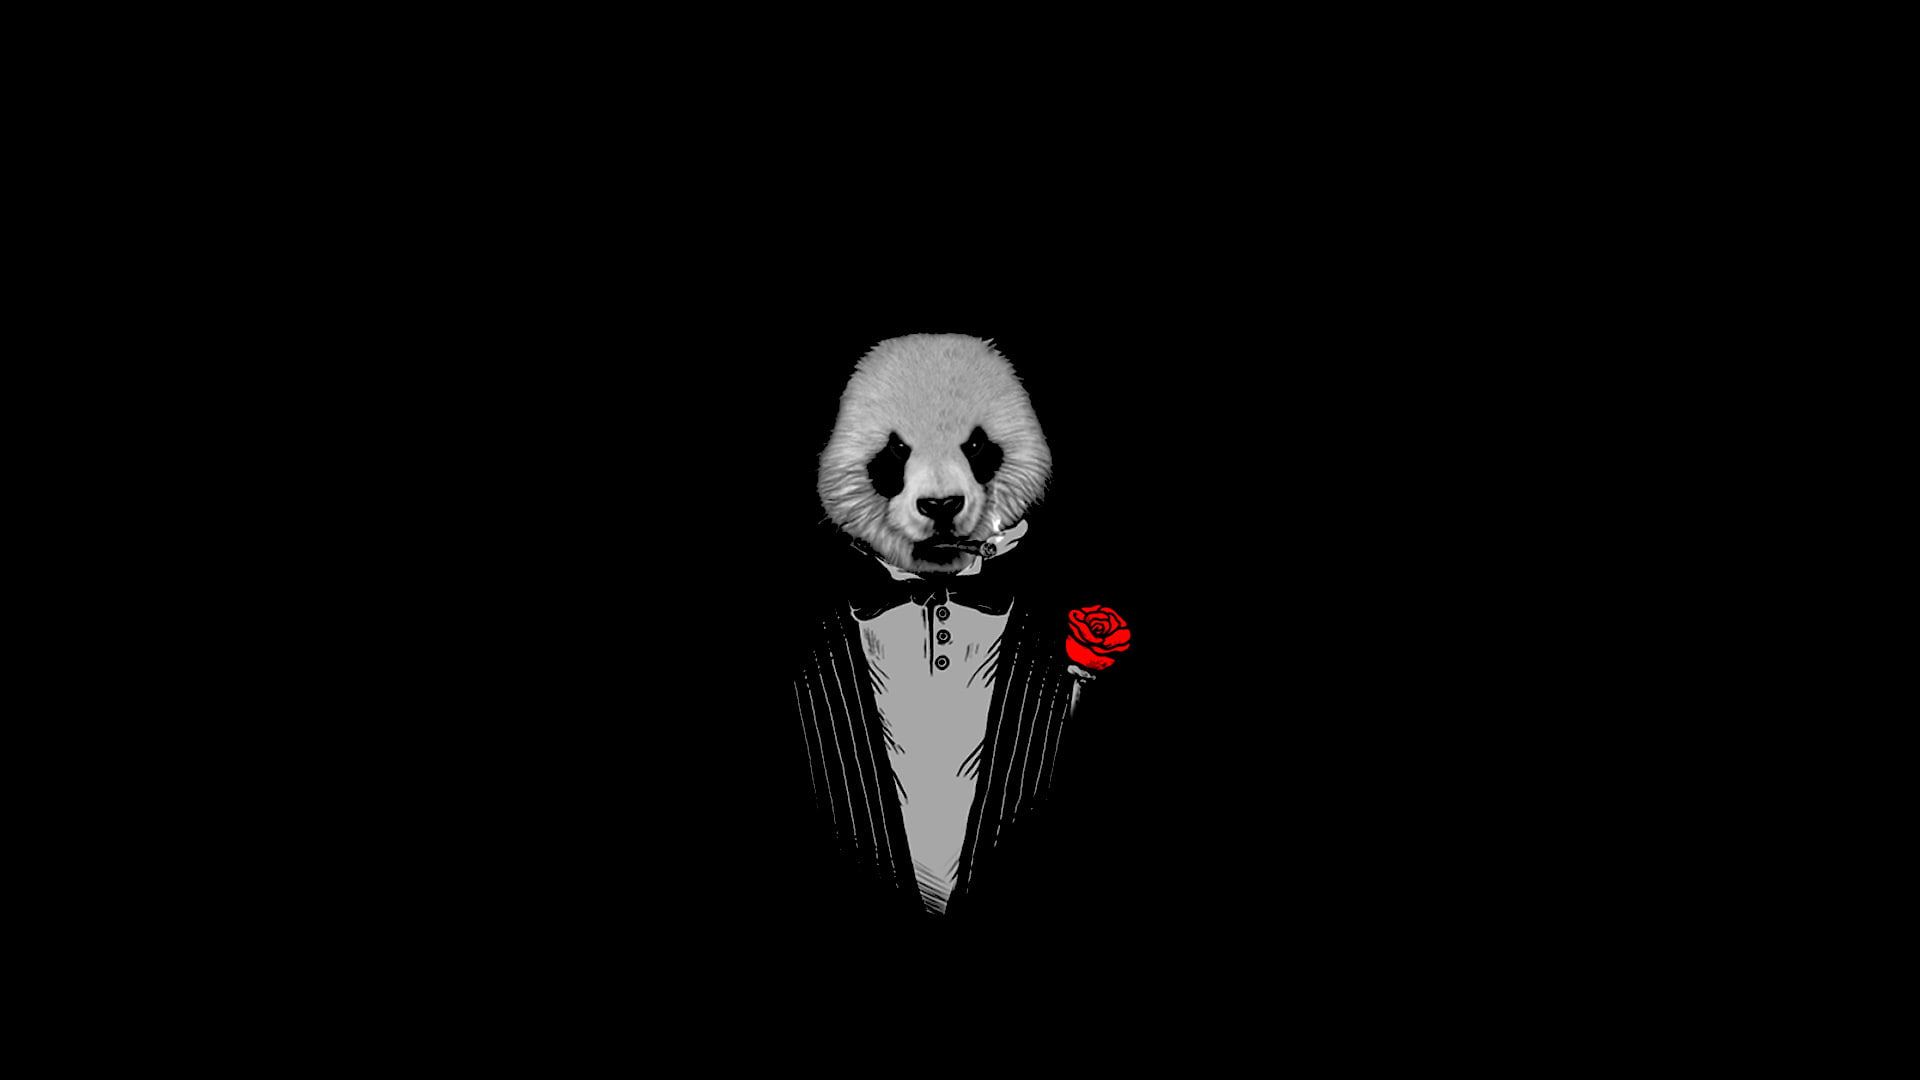 The Godfather Hintergrundbild 1920x1080. Black Panda The Godfather Abstract Photography HD Art Wallpaper